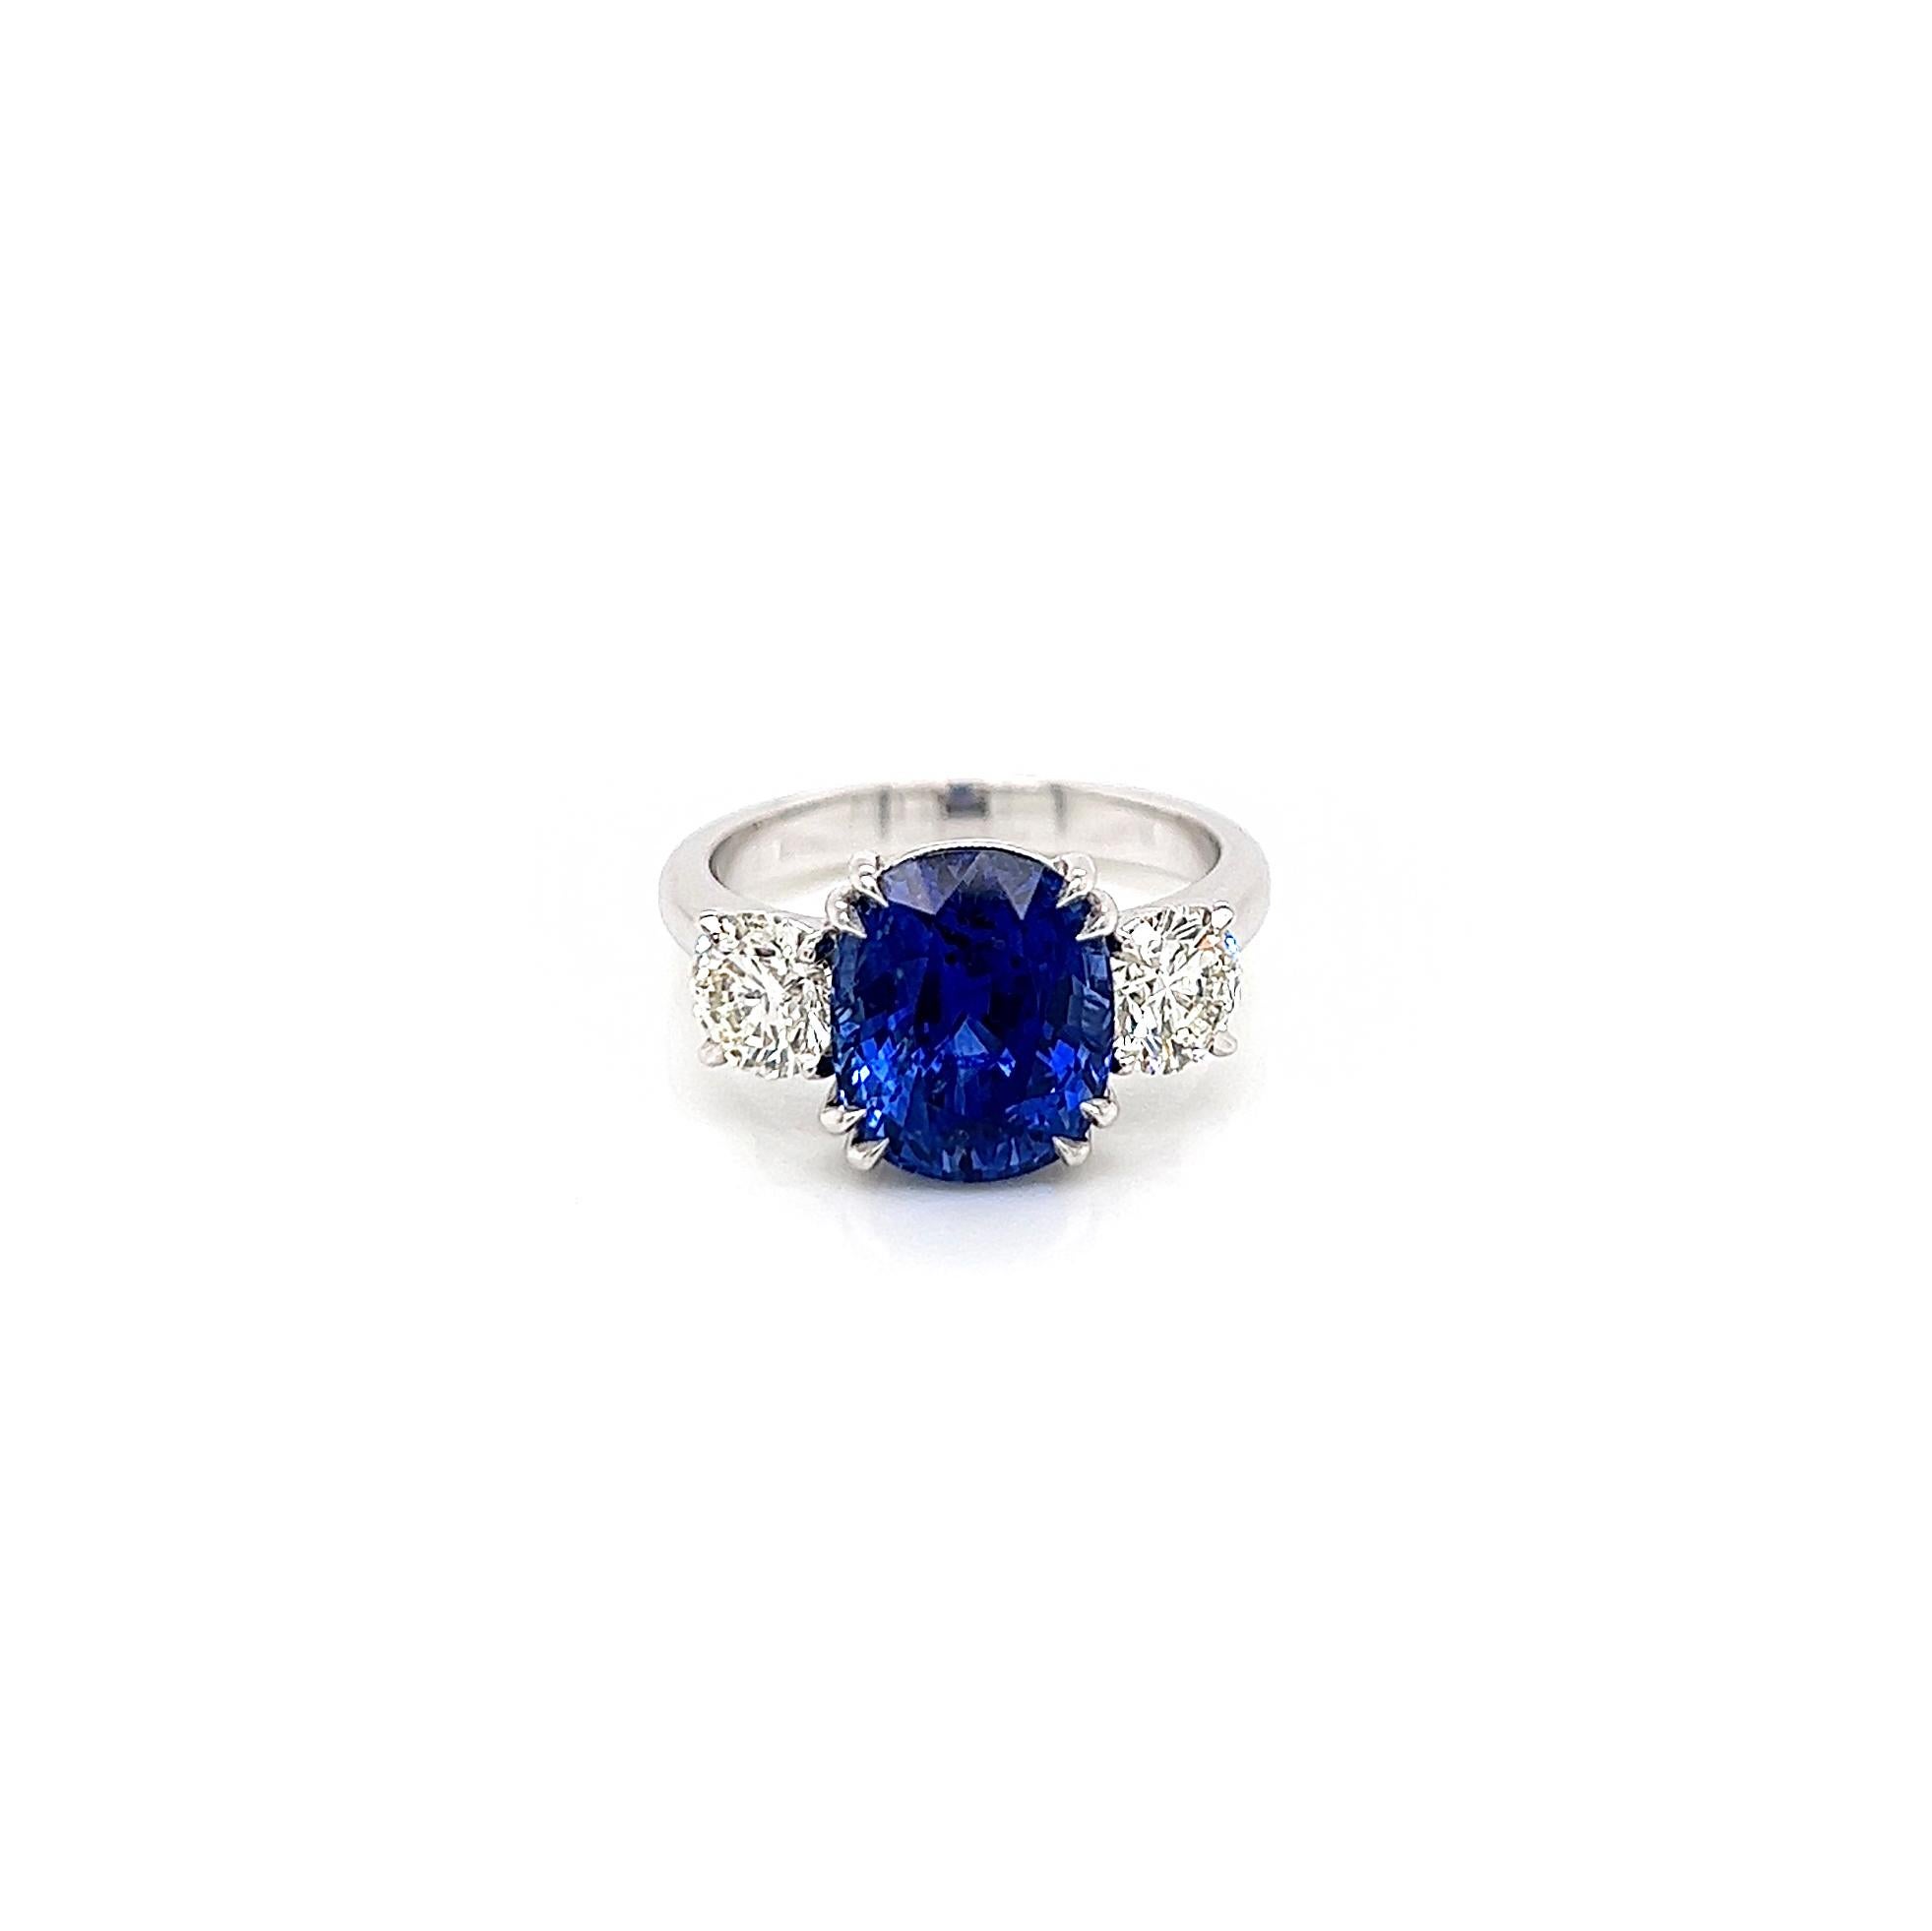 6.14 Total Carat Sapphire and Diamond Three Stone Ladies Ring, GIA Certified

-Metal Type: Platinum
-5.05 Carat Cushion Cut Natural Blue Sapphire, GIA Certified 
-Sapphire Measurements: 10.13 x 8.43 x 6.92 mm
-Geographic Origin: Sri Lanka 
-1.09